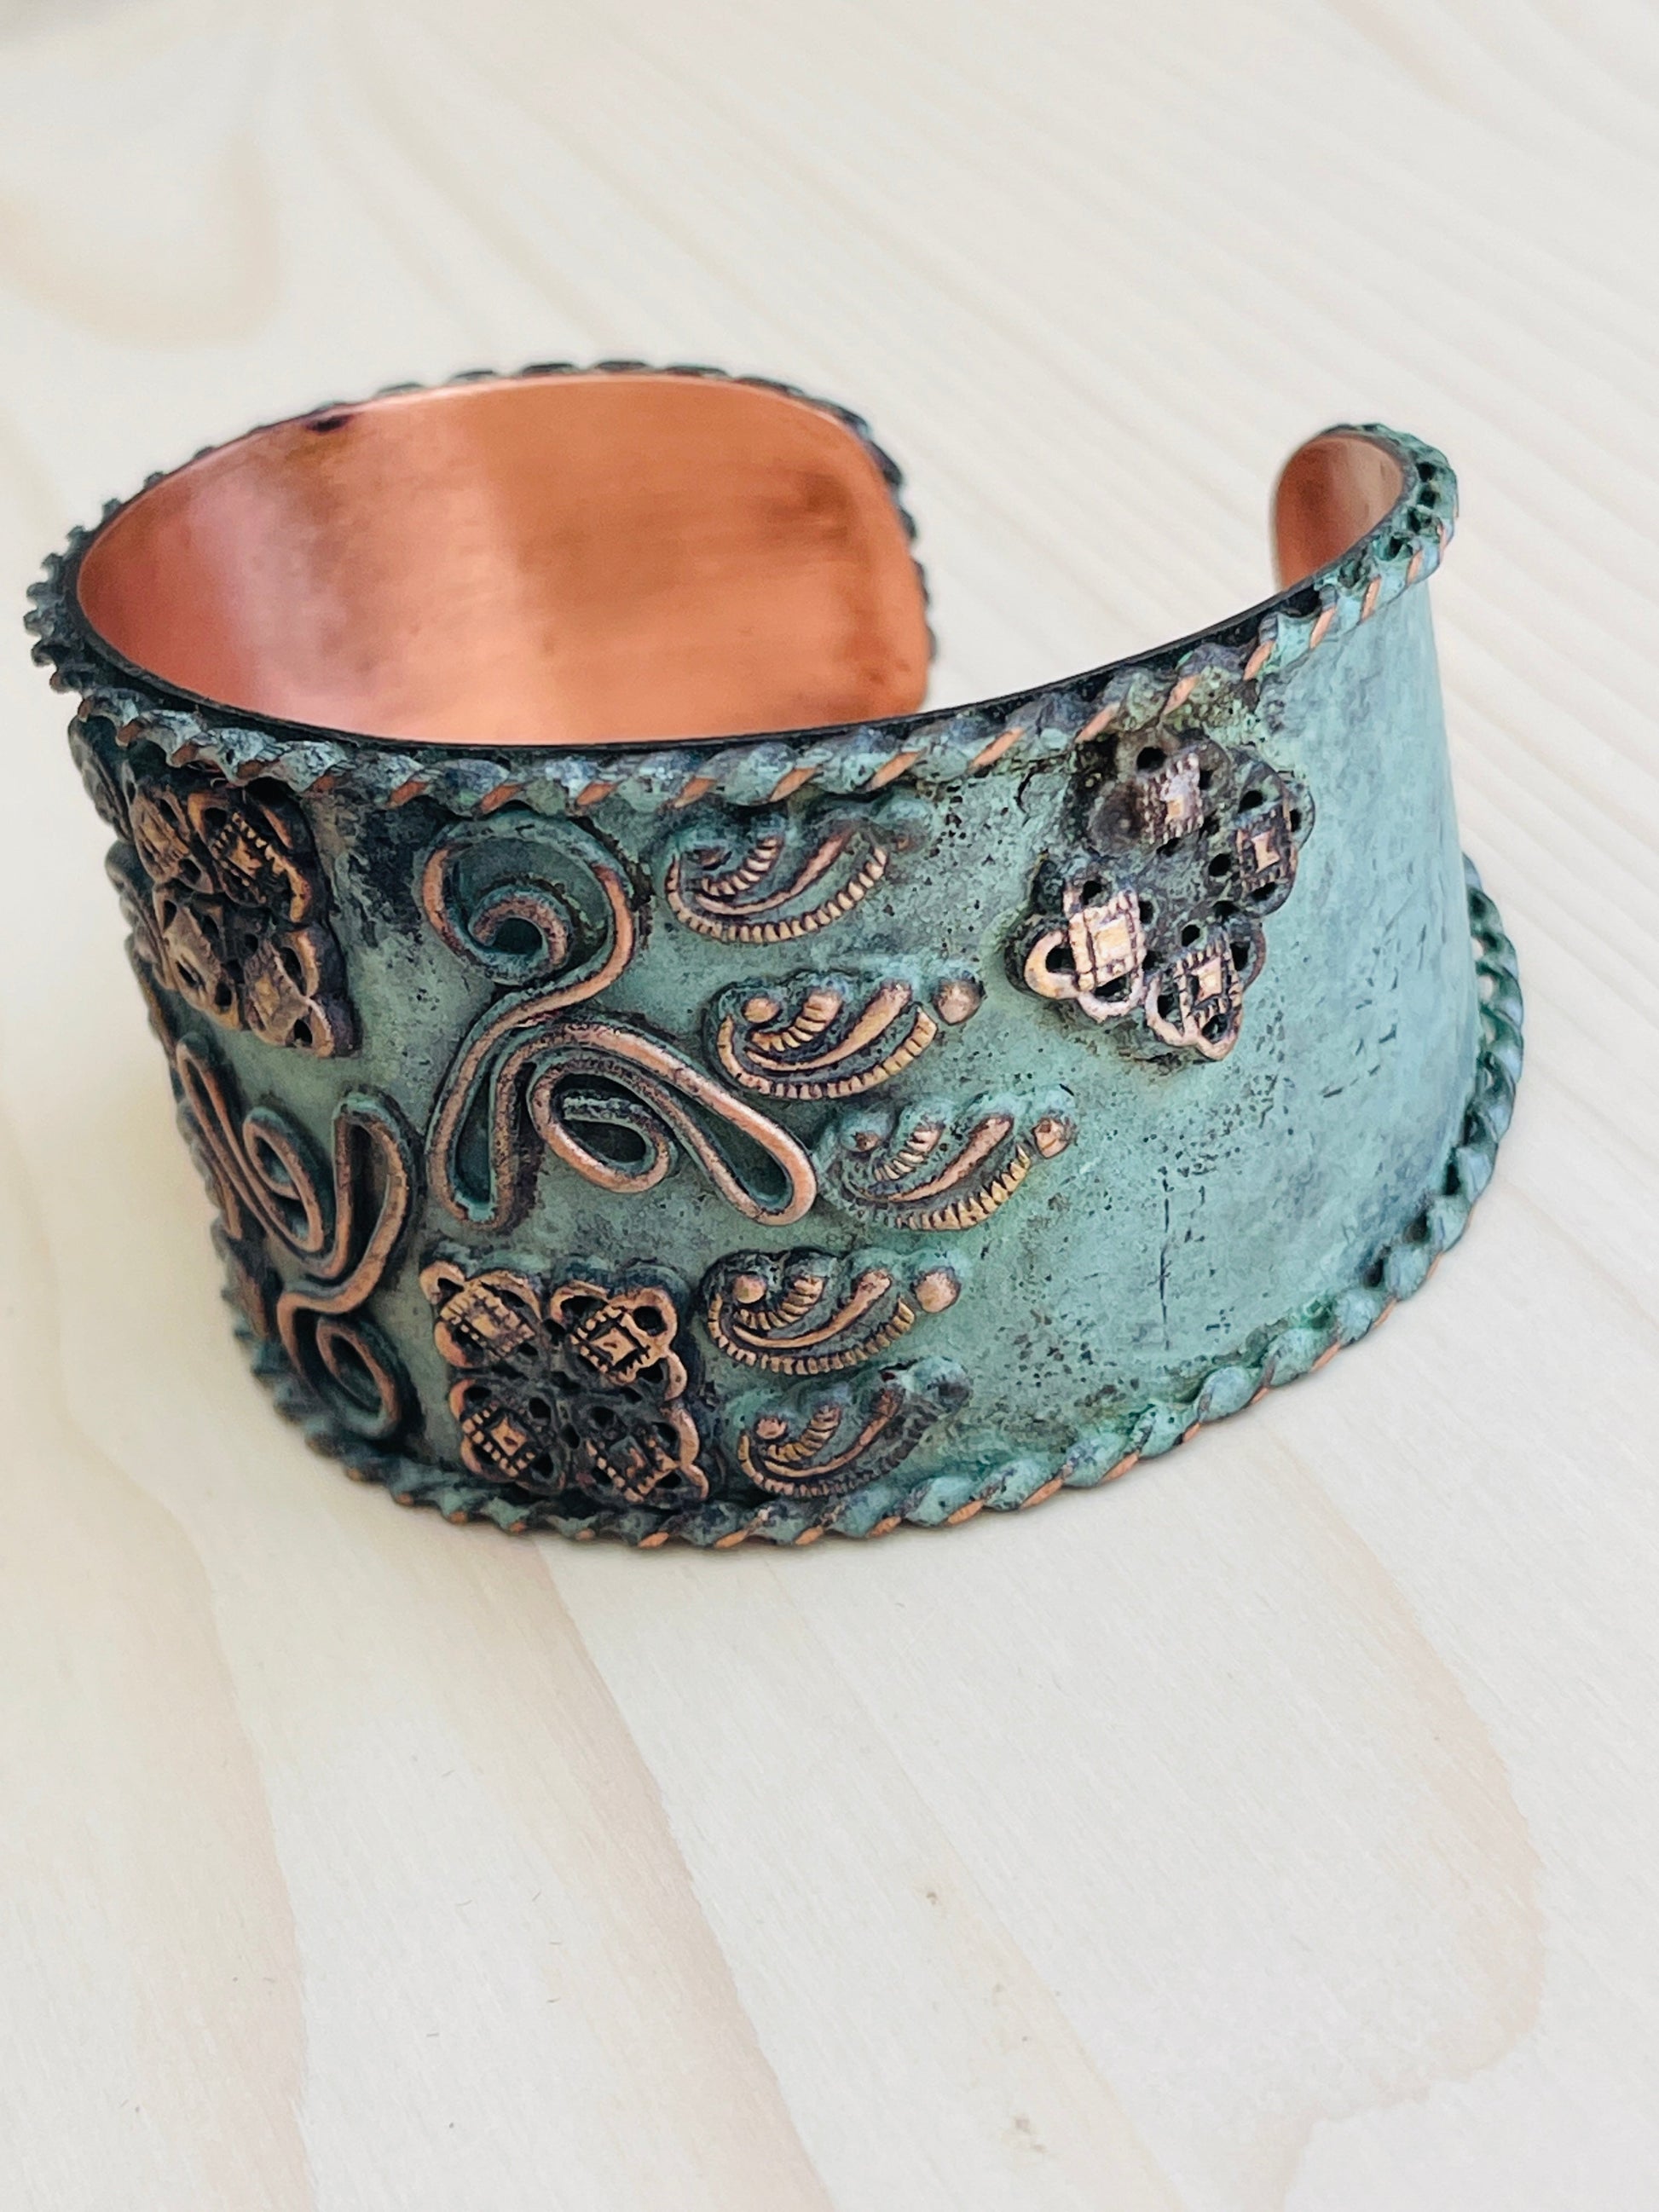 Handmade copper bracelet-cuff designed with a beautiful pale aqua turquoise patina finish